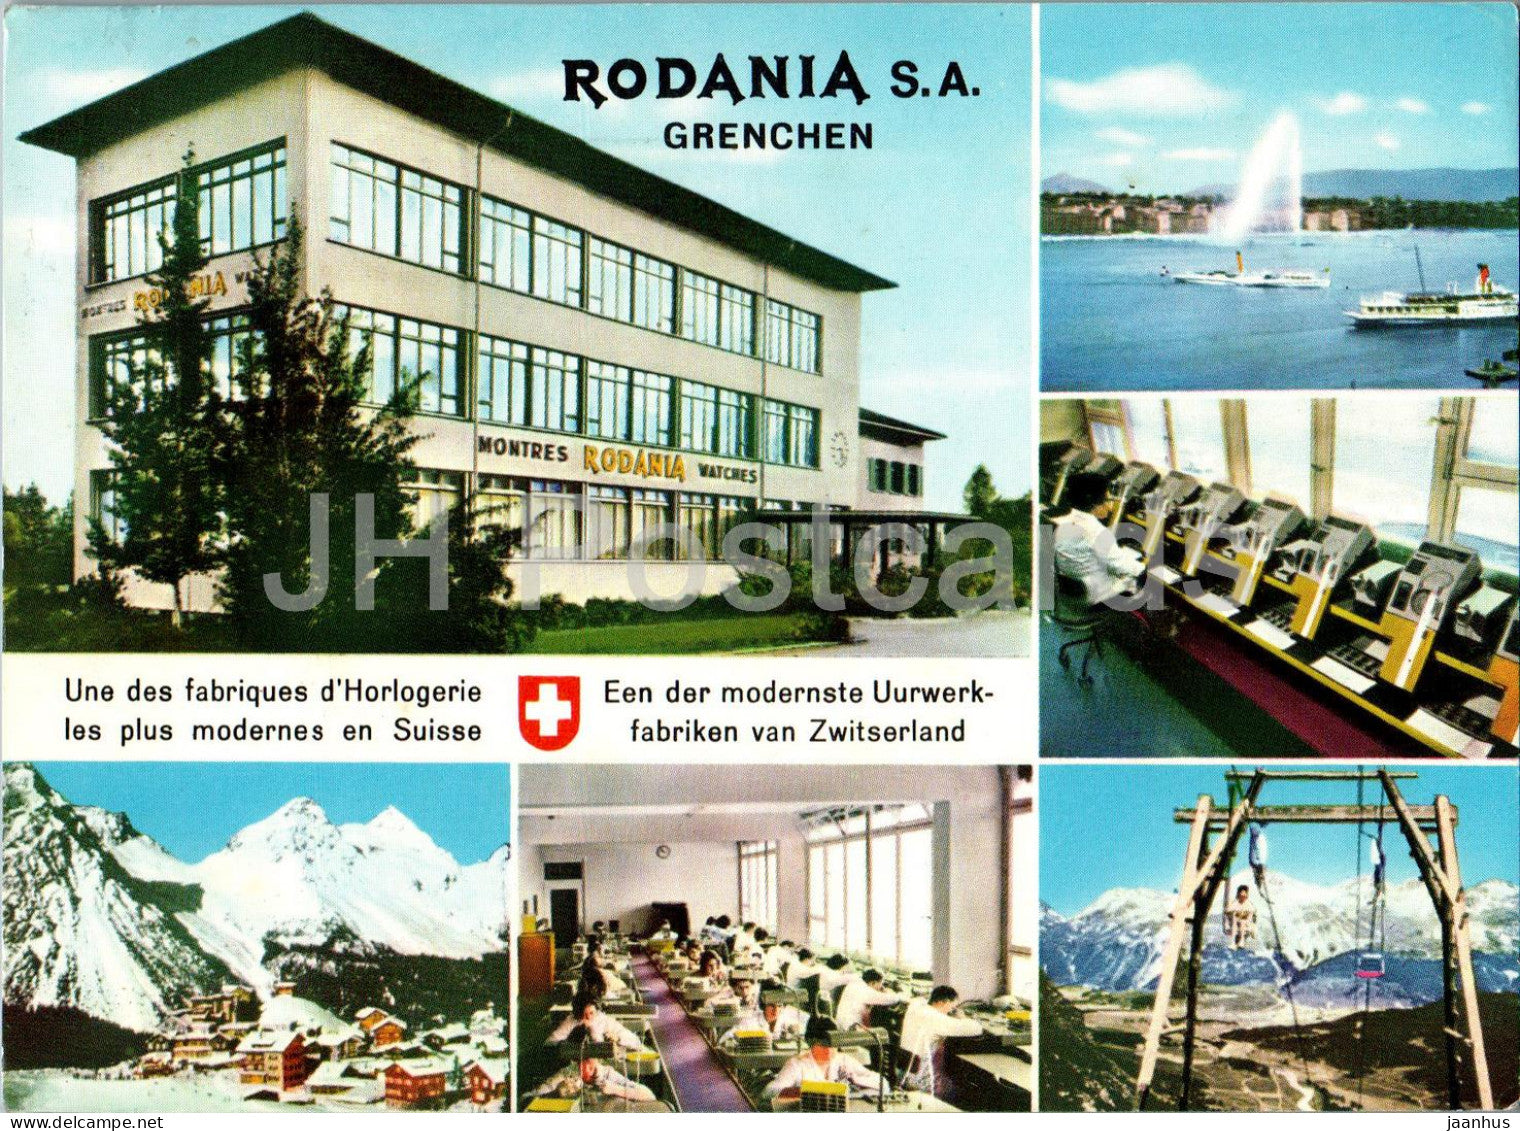 Rodania  - Grenchen - Horlogerie Charlet Lagier - Gouzeaucourt - multiview - 1963 - Switzerland - used - JH Postcards